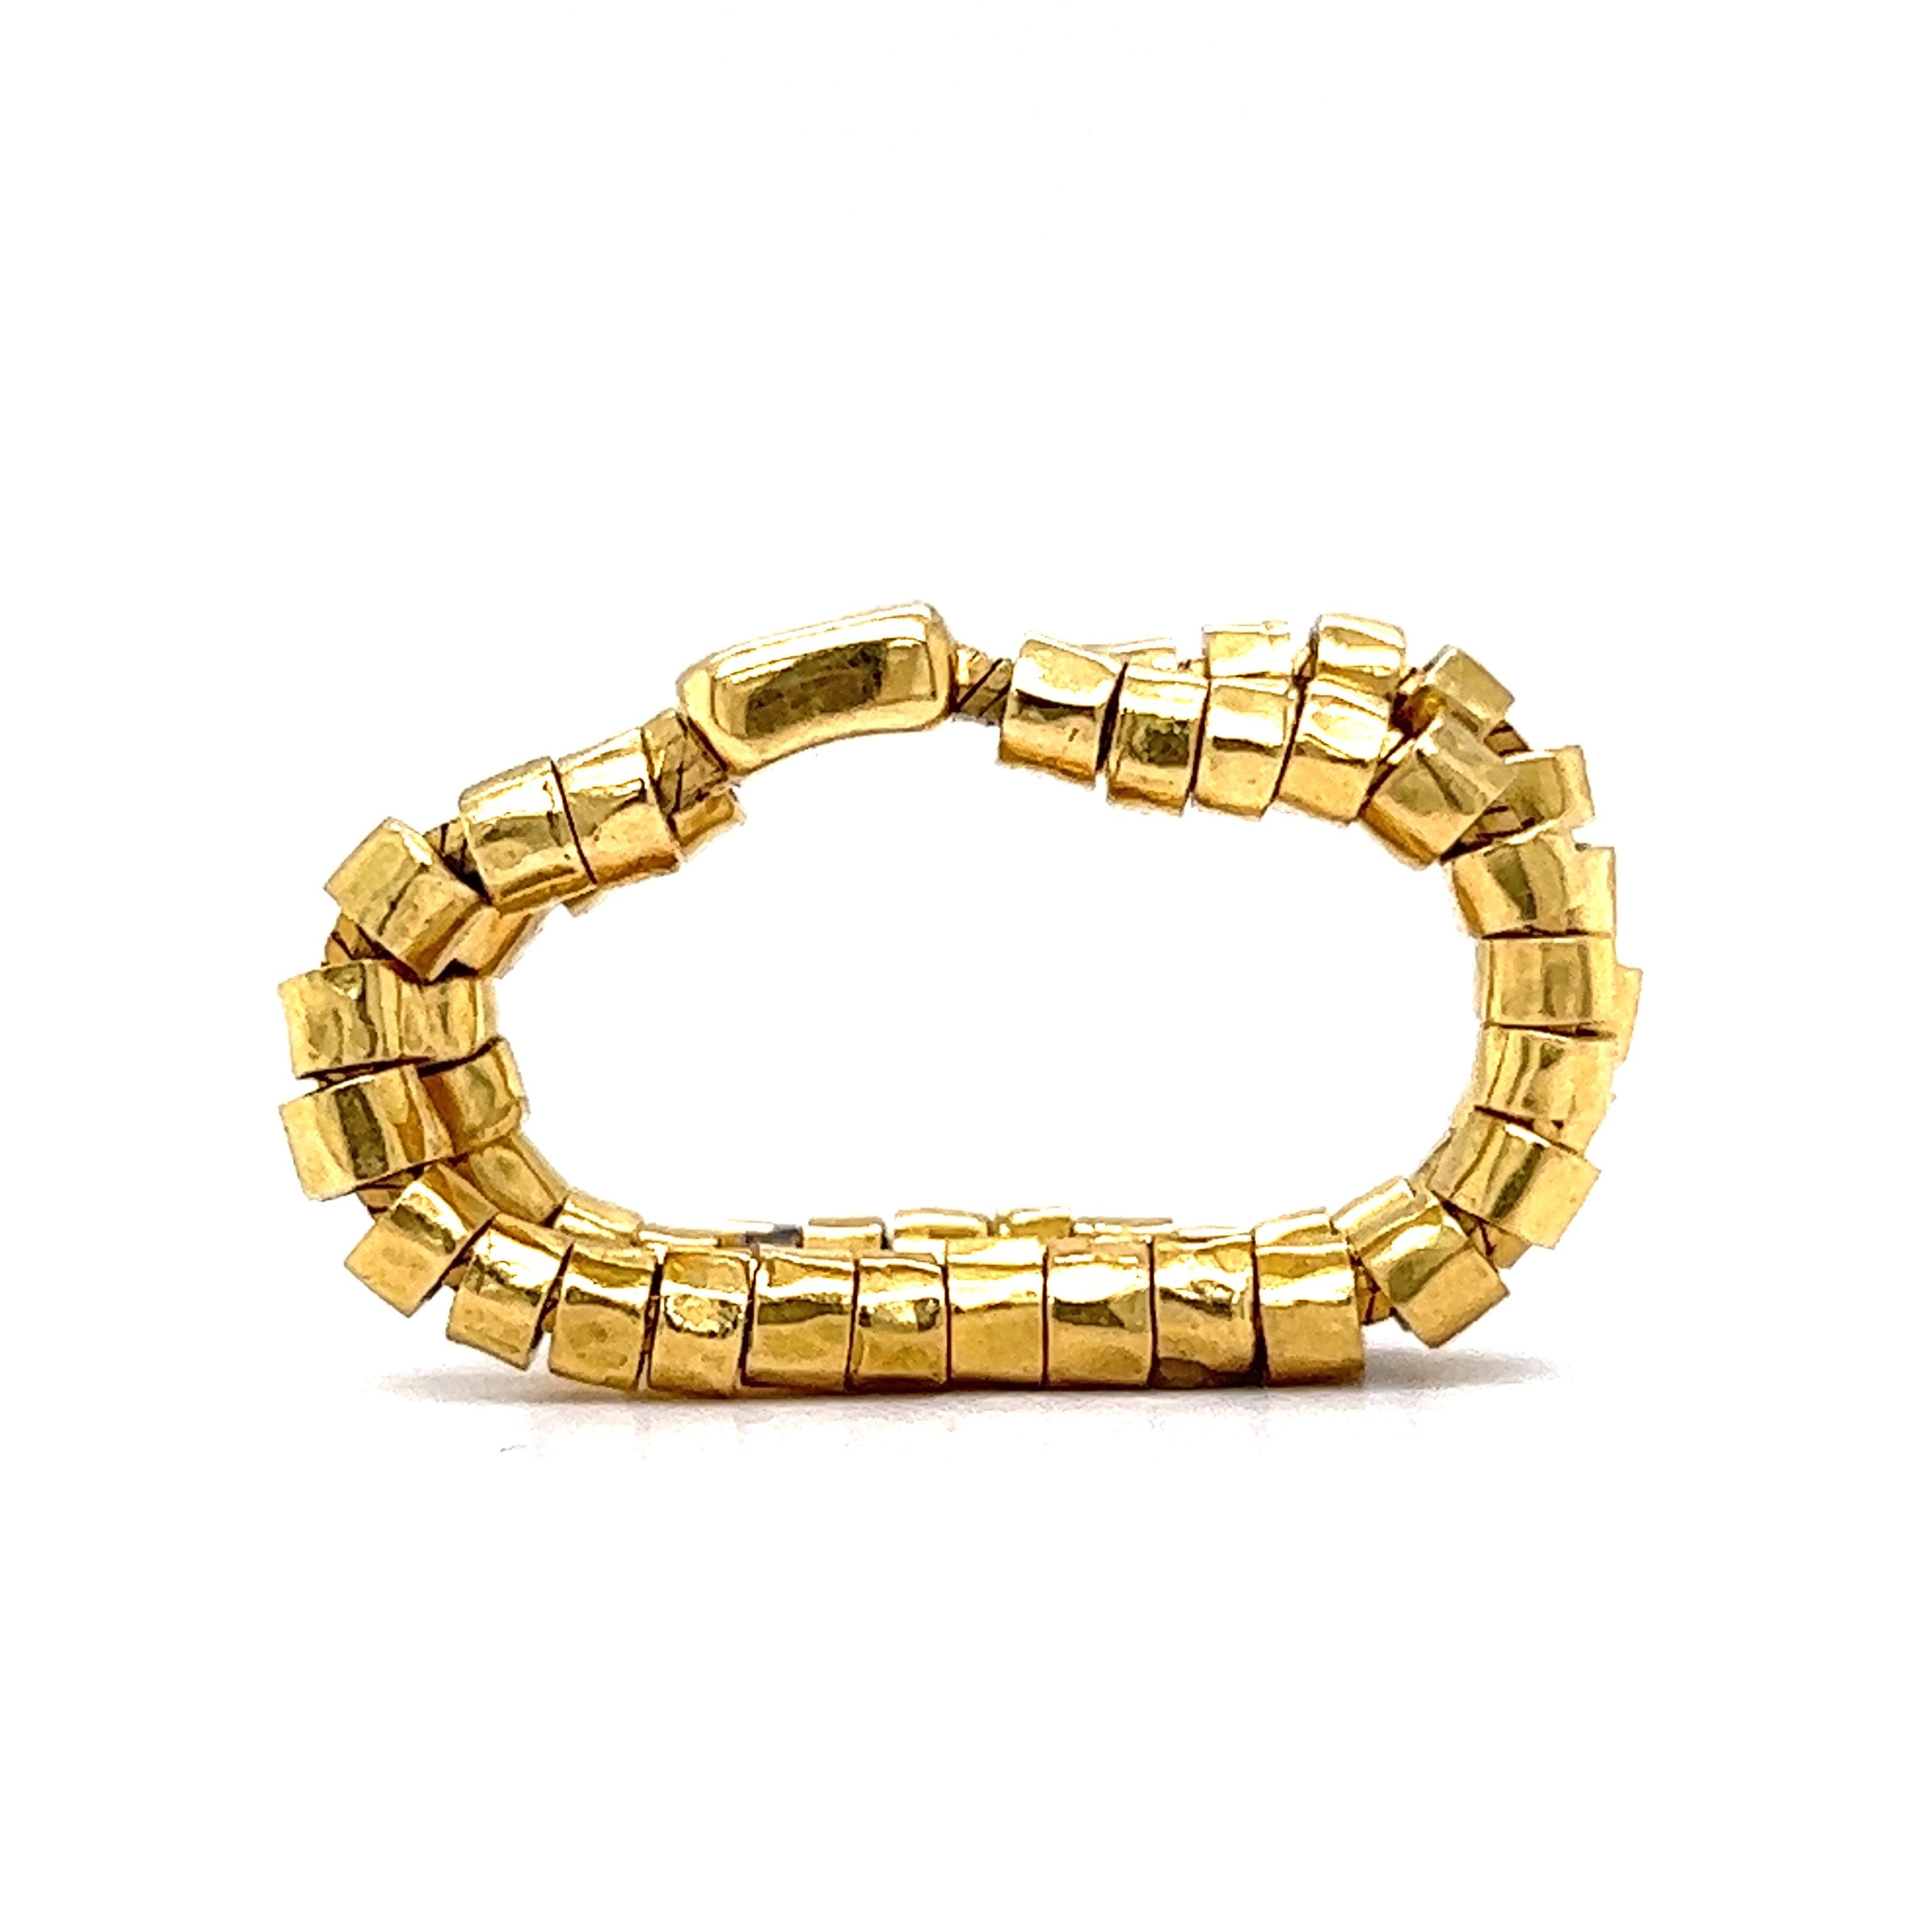 Sold at Auction: Gucci & H. Stern 18K Gold & Diamond Link Bracelet